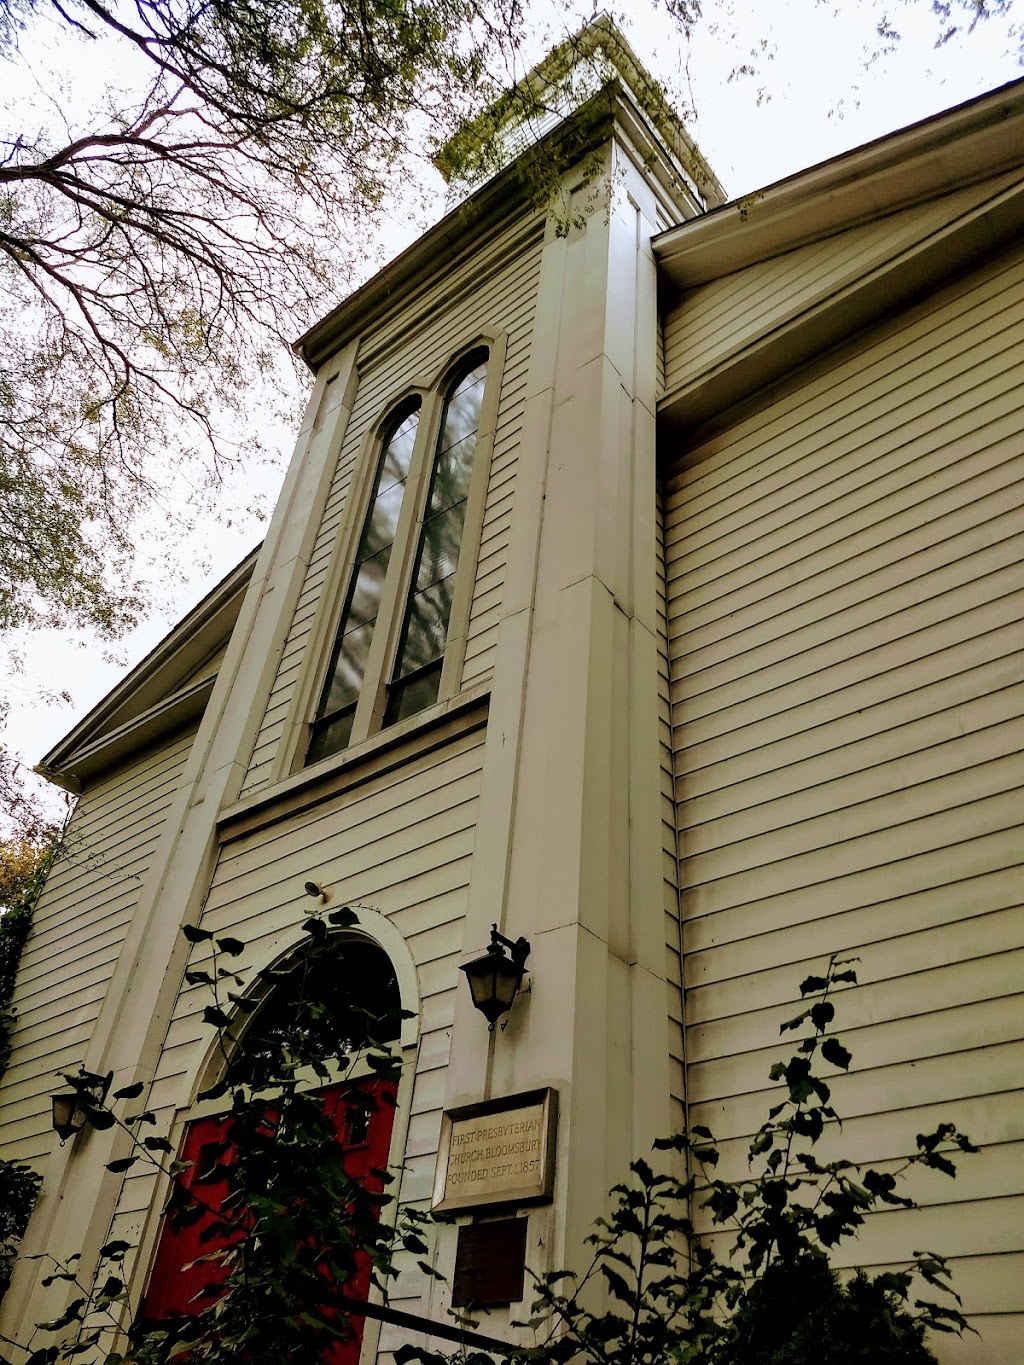 First Presbyterian Church of Bloomsbury, N.J. | 66 Church St, Bloomsbury, NJ 08804 | Phone: (908) 479-4700